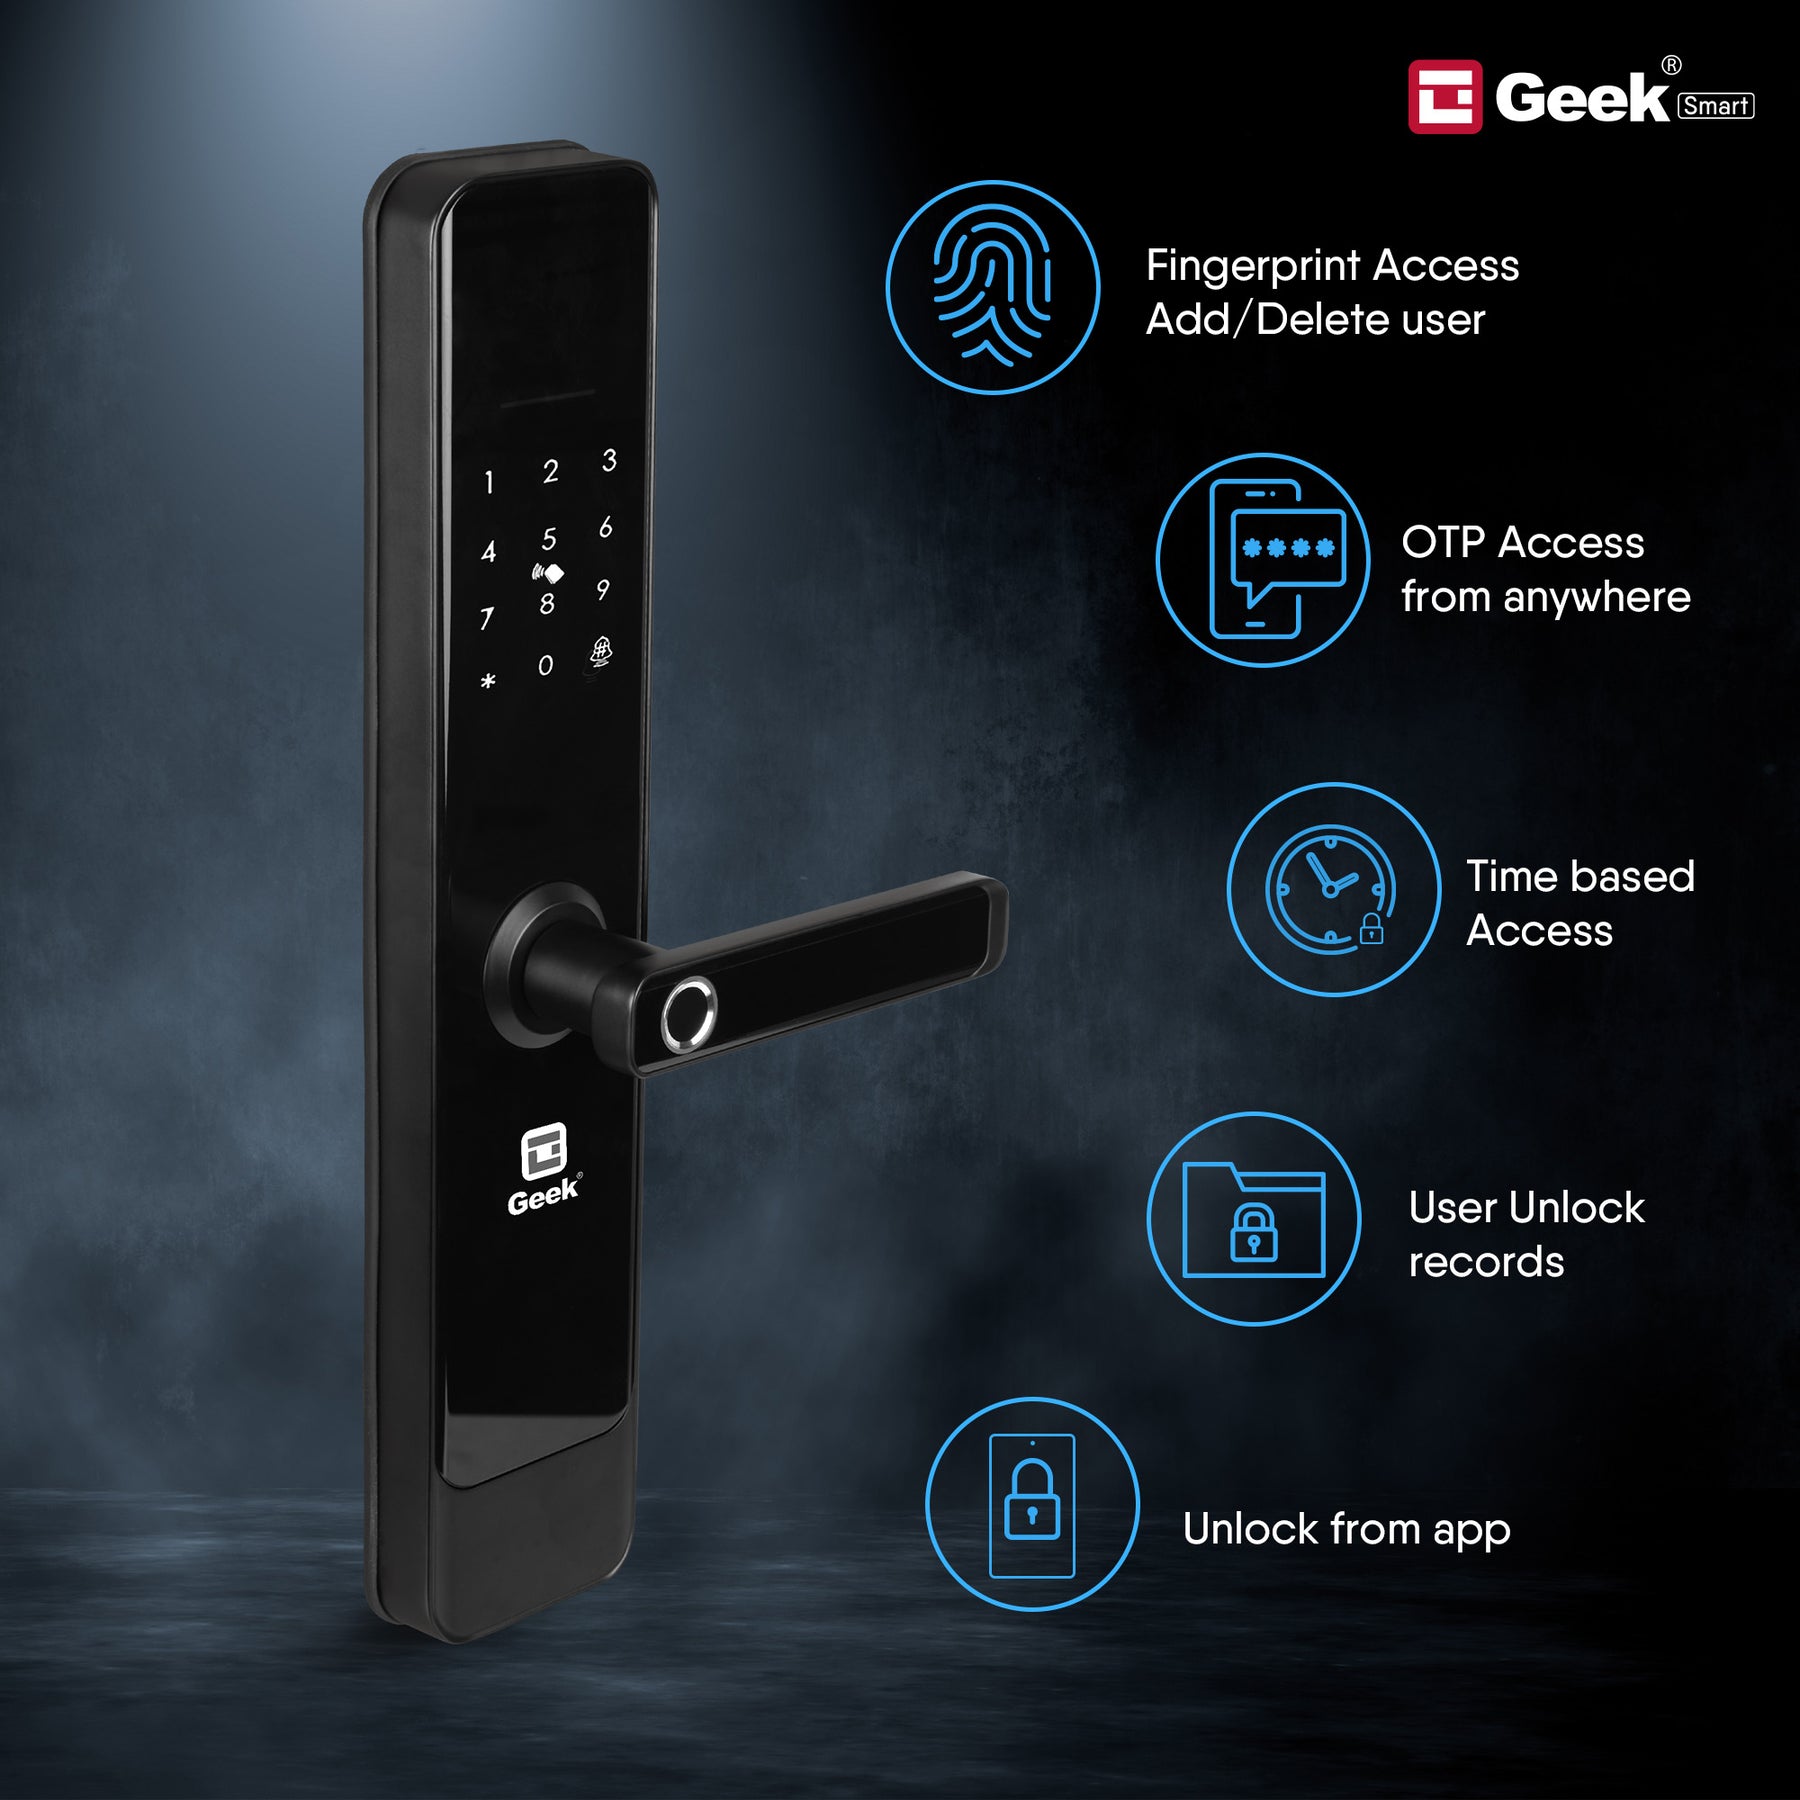 Geek E908 Wi-Fi Enabled 5-in-1 Smart Digital Door Lock With 5 Locking